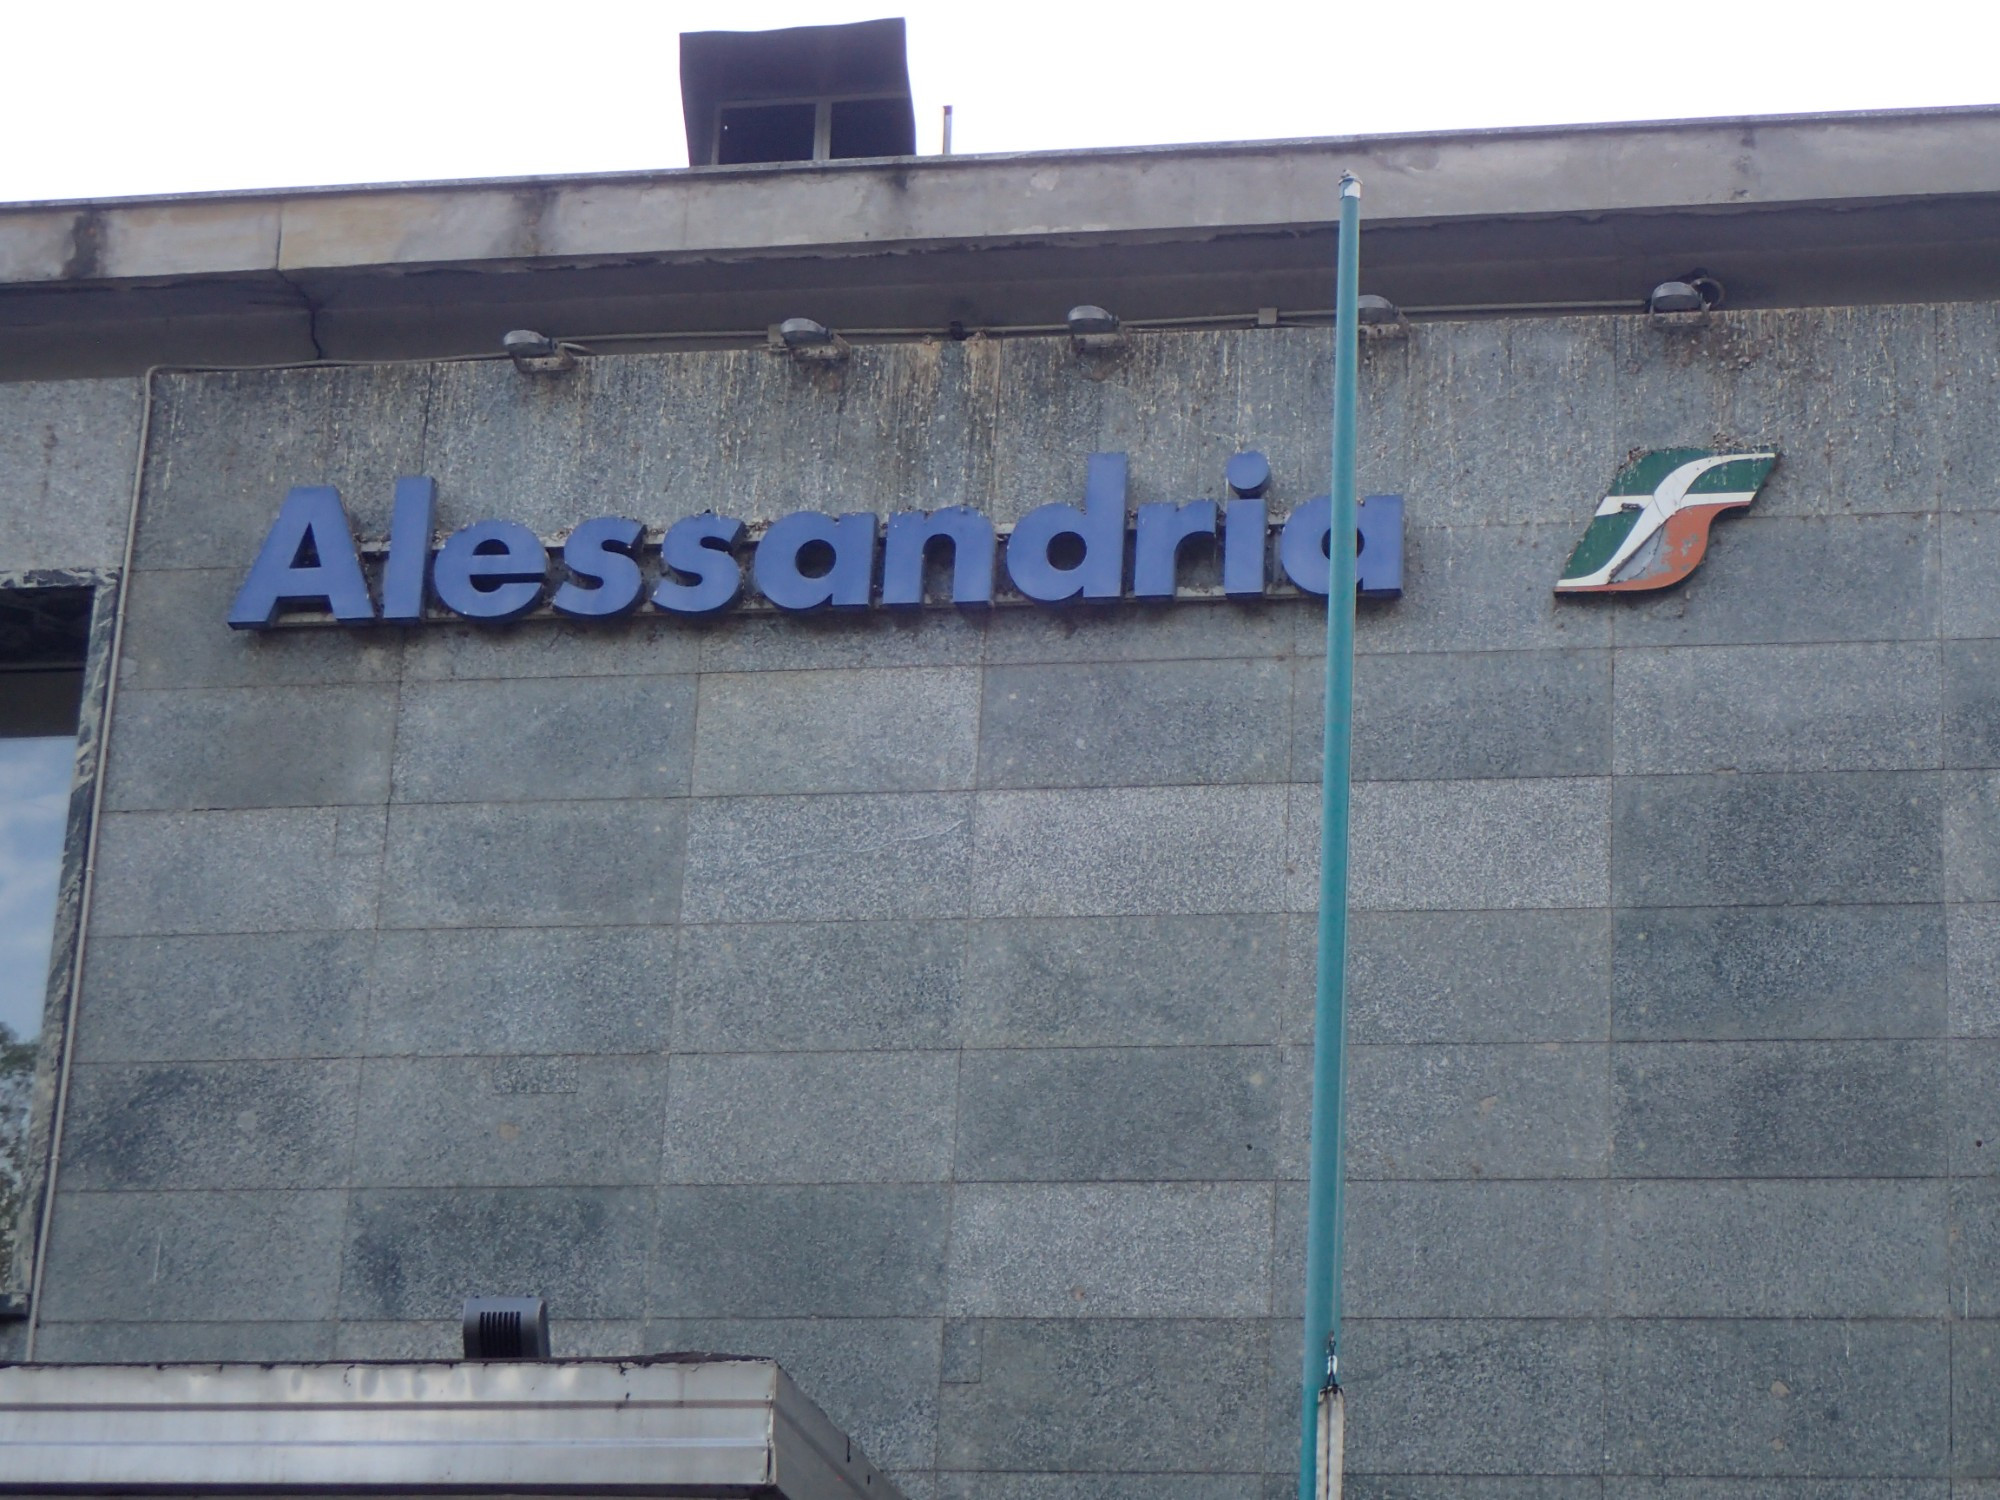 Alessandria Train Station, Италия